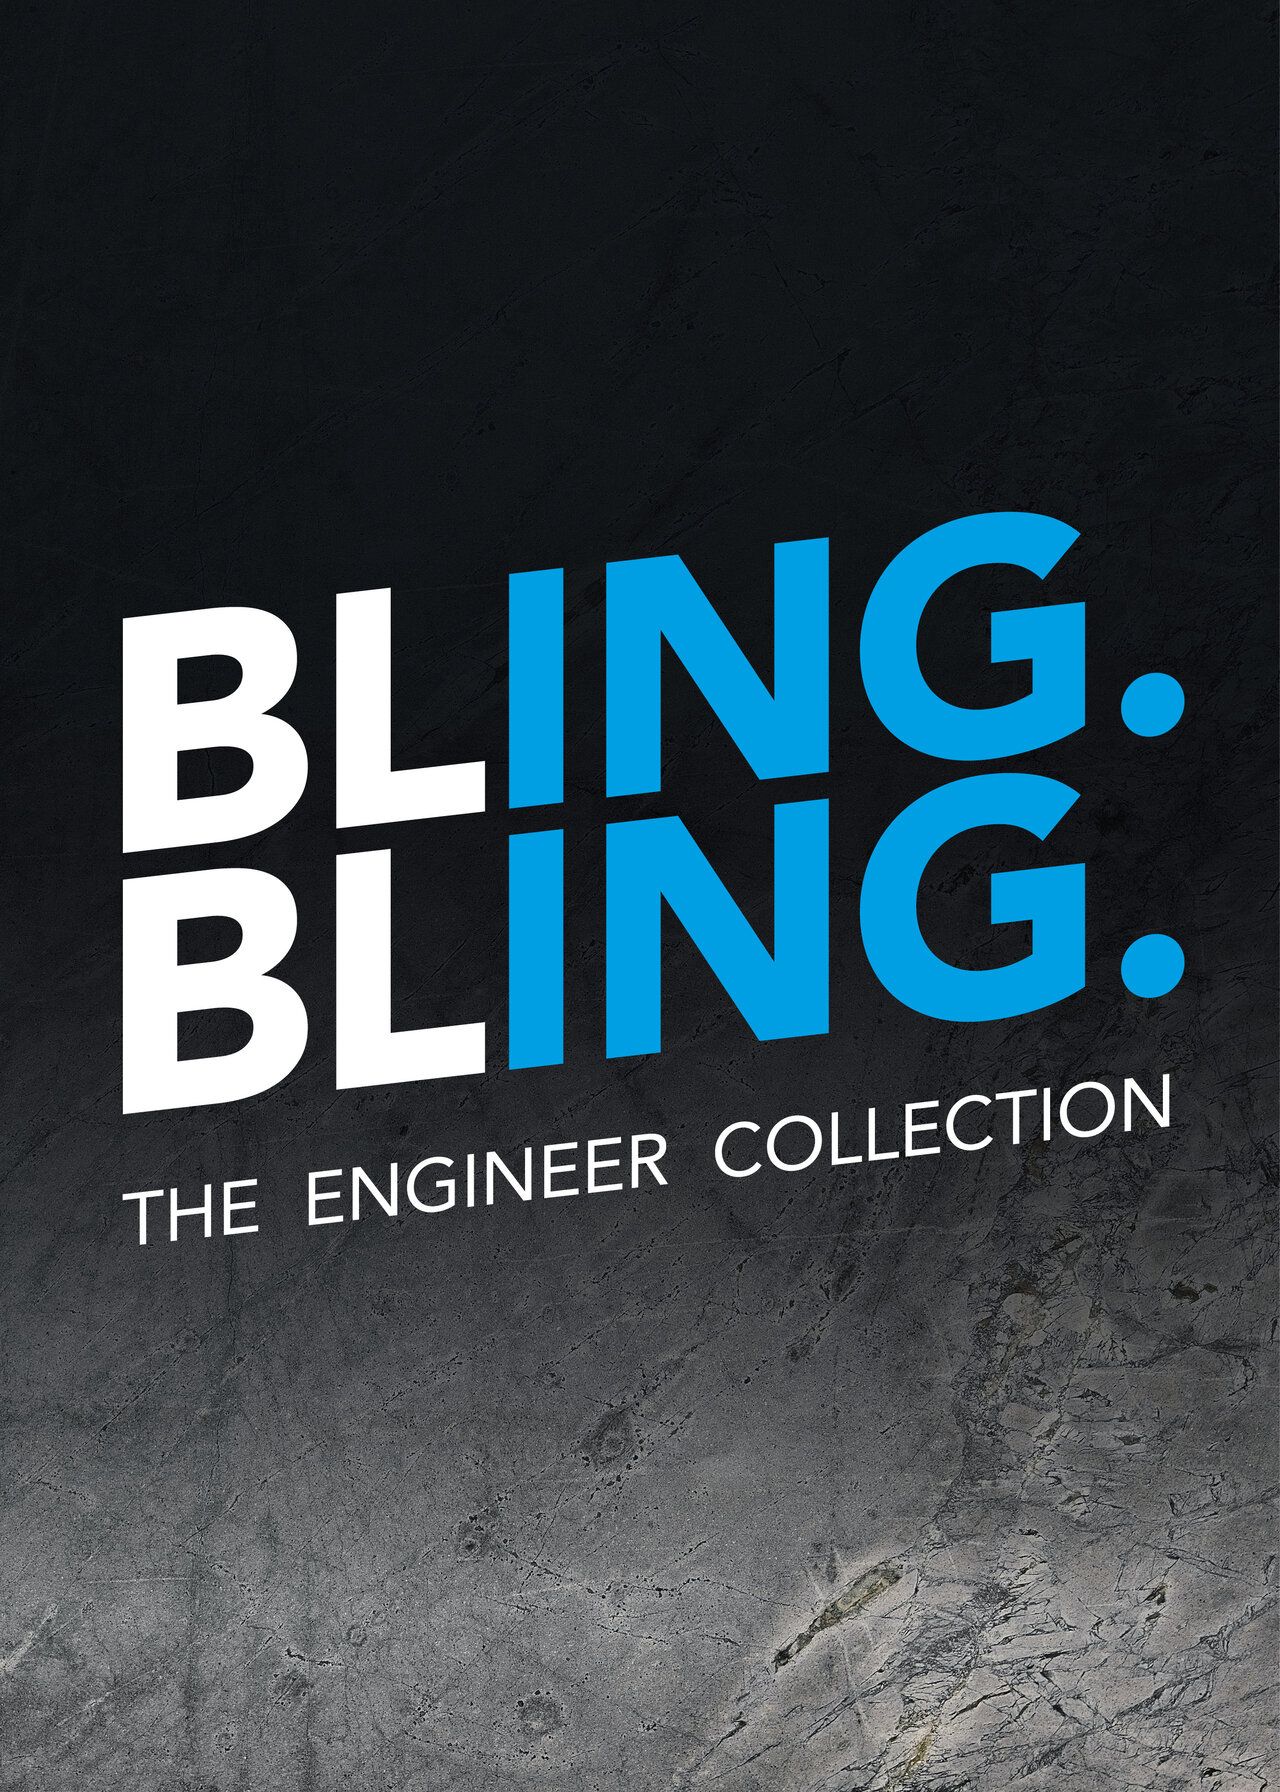 Das Logo "Bling. Bling." in weiß-blau mit dem Text "The Engineer Collection".